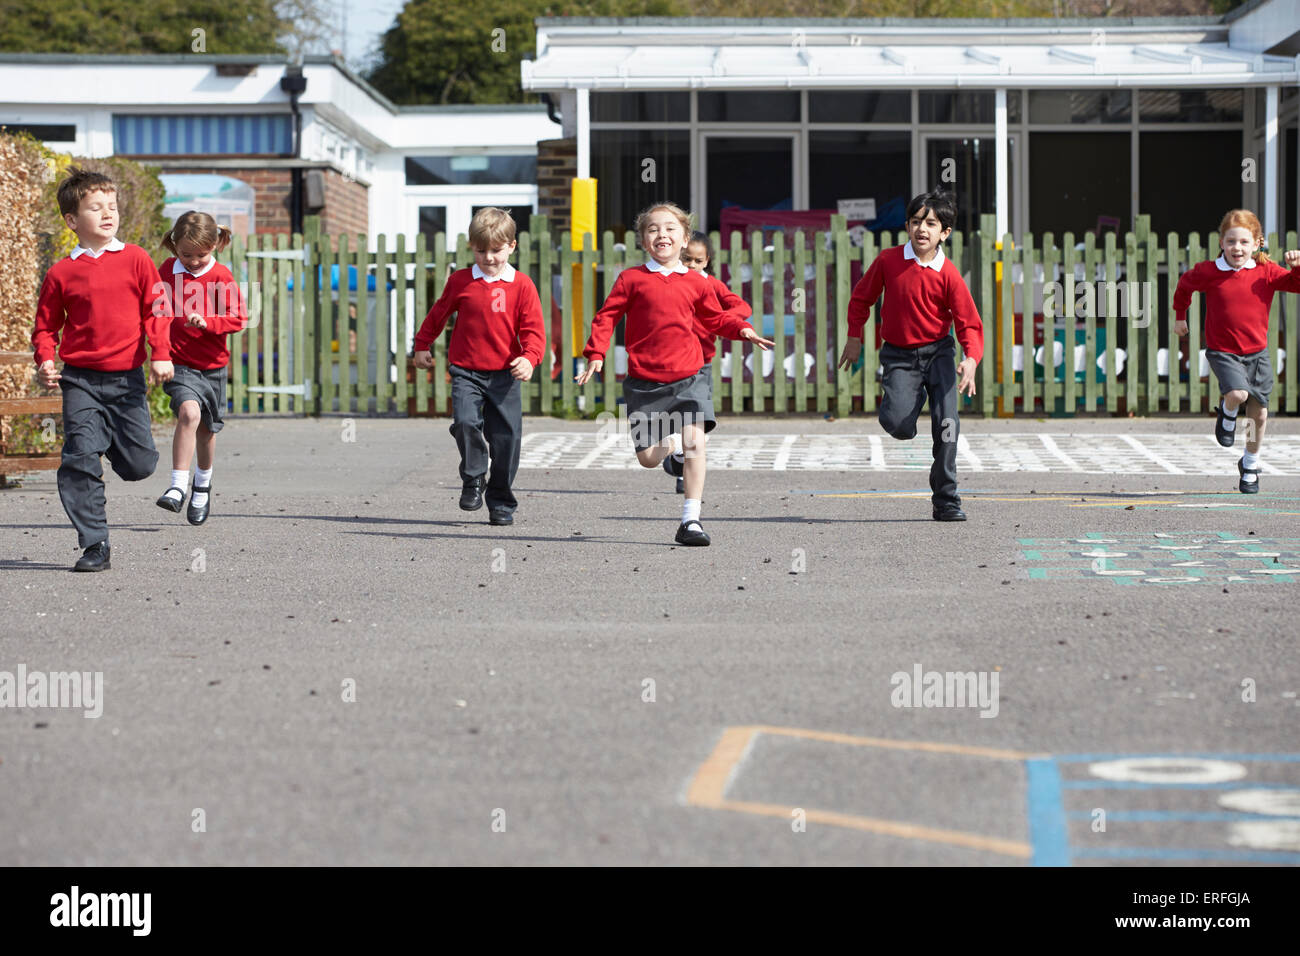 Elementary School Pupils Running In Playground Stock Photo